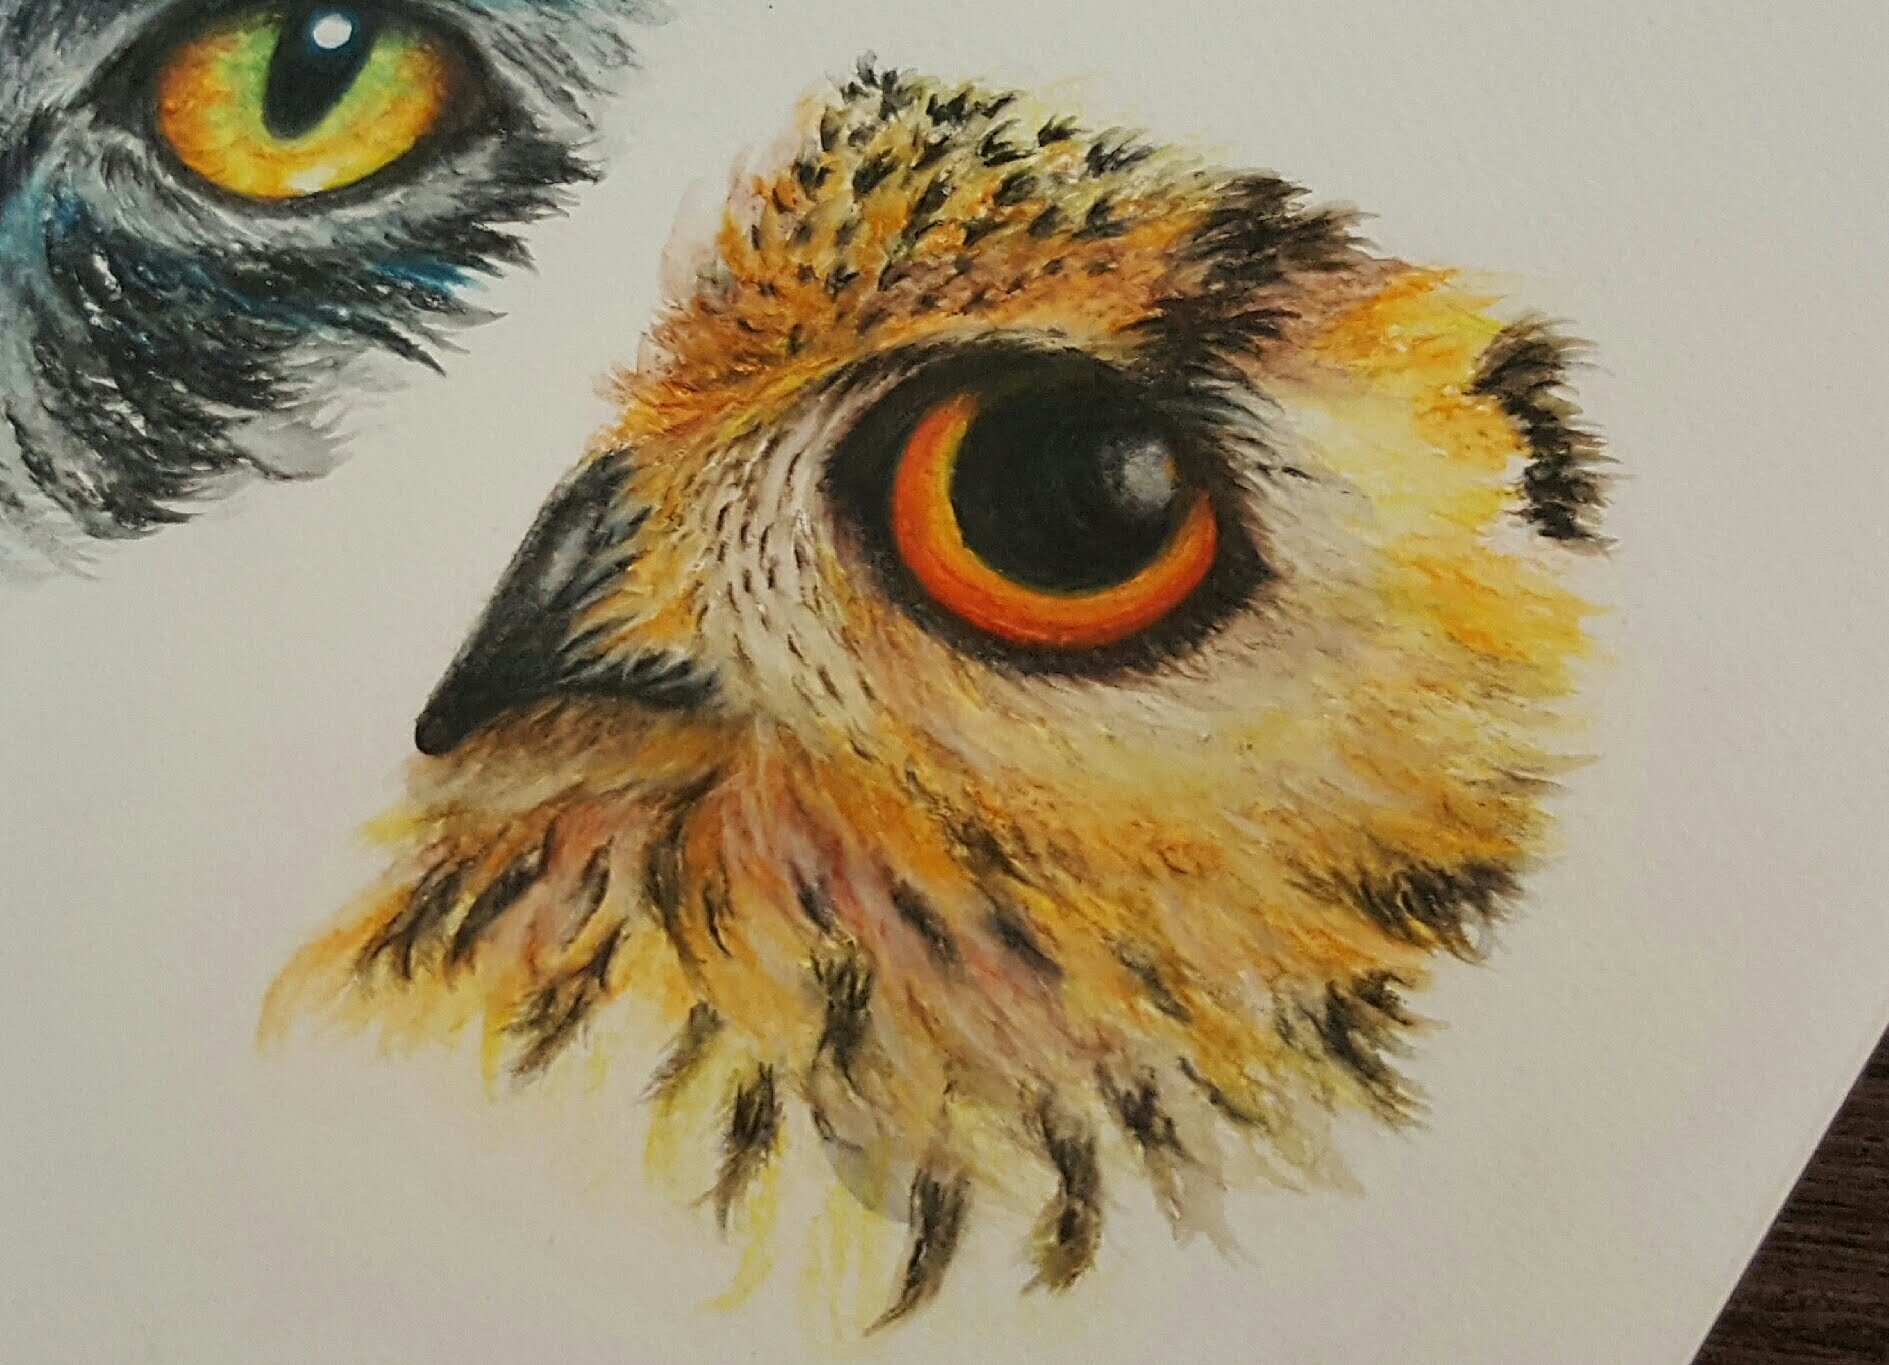 Owl Eye Drawing at GetDrawings Free download